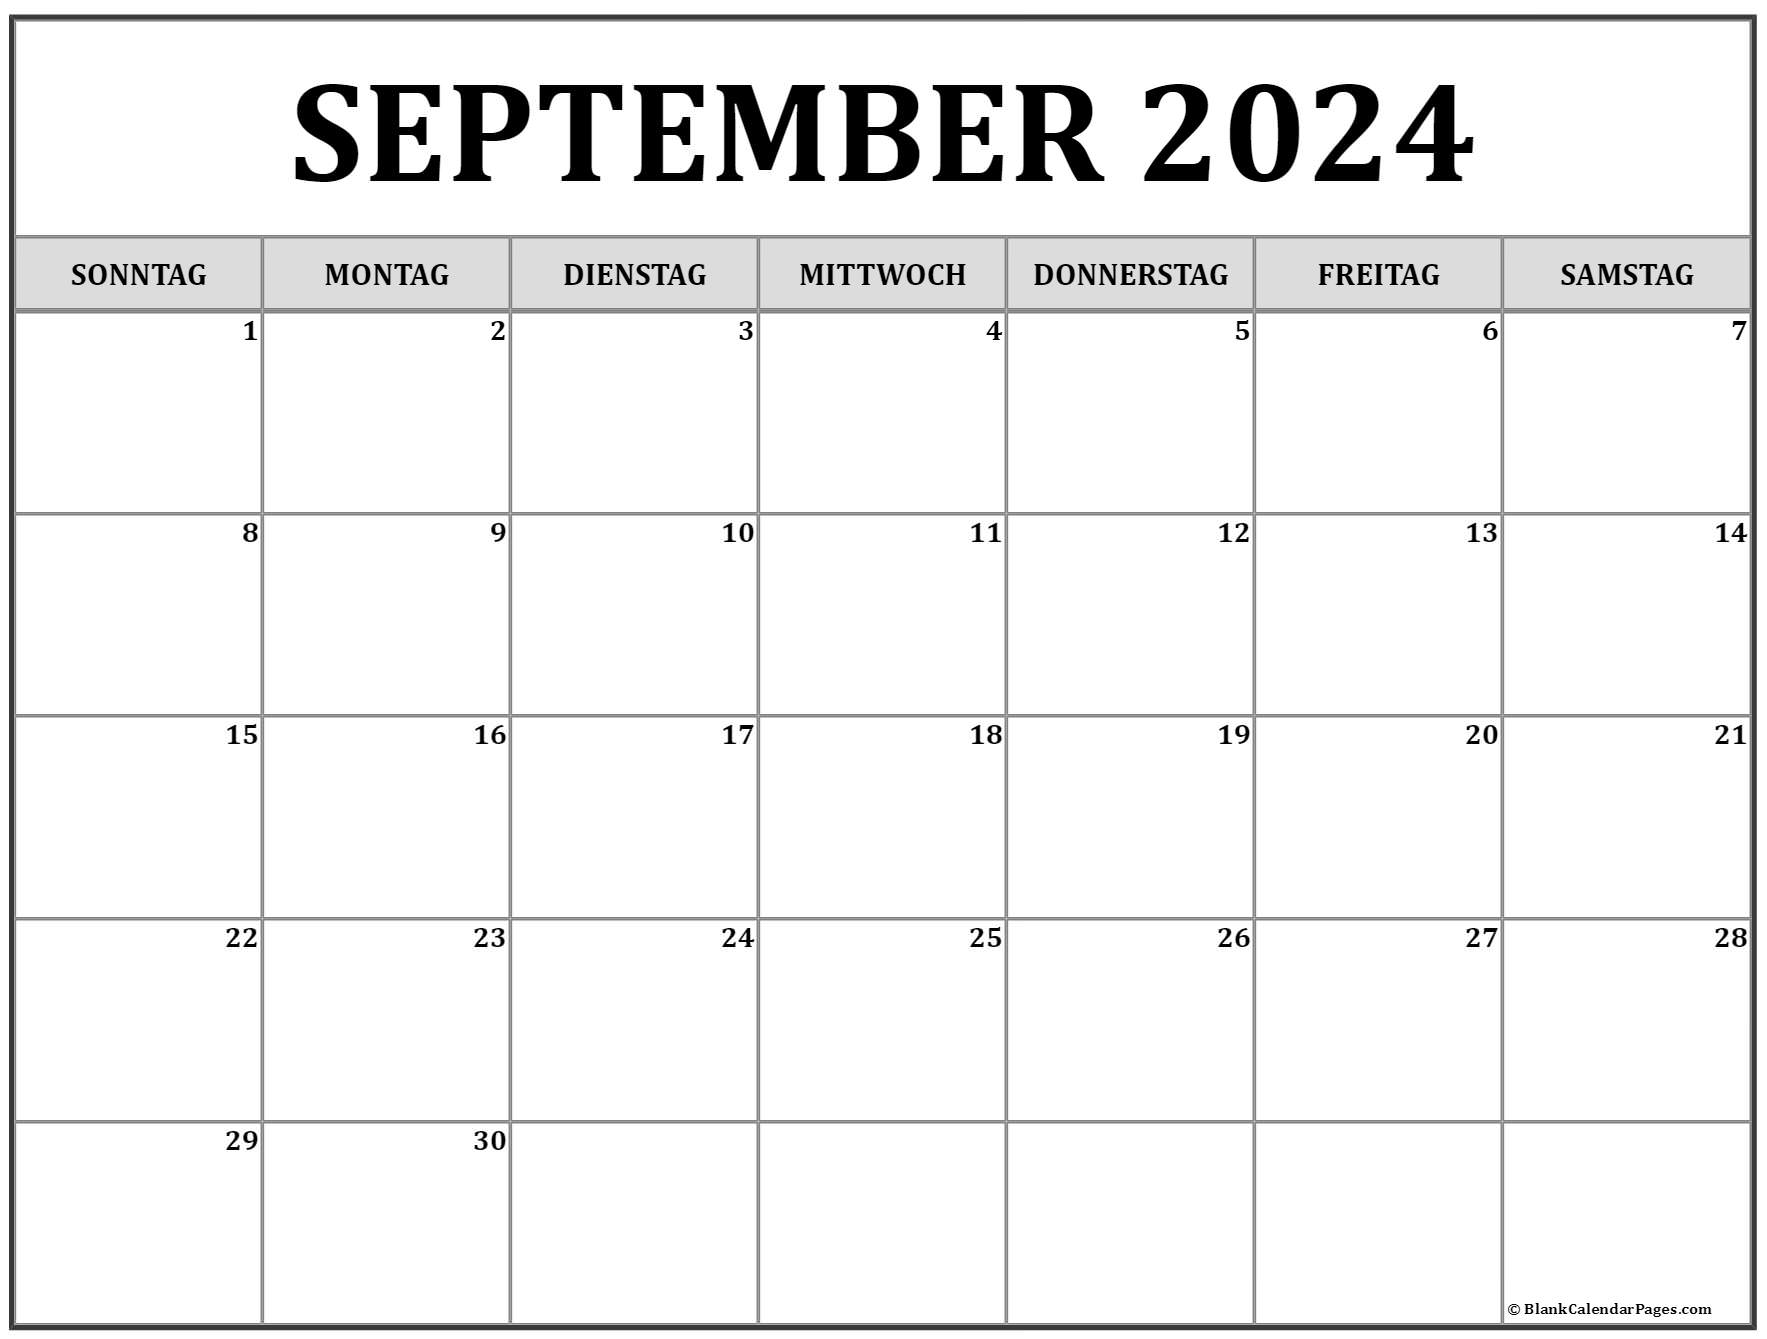  September 2022  kalender kalender 2022 